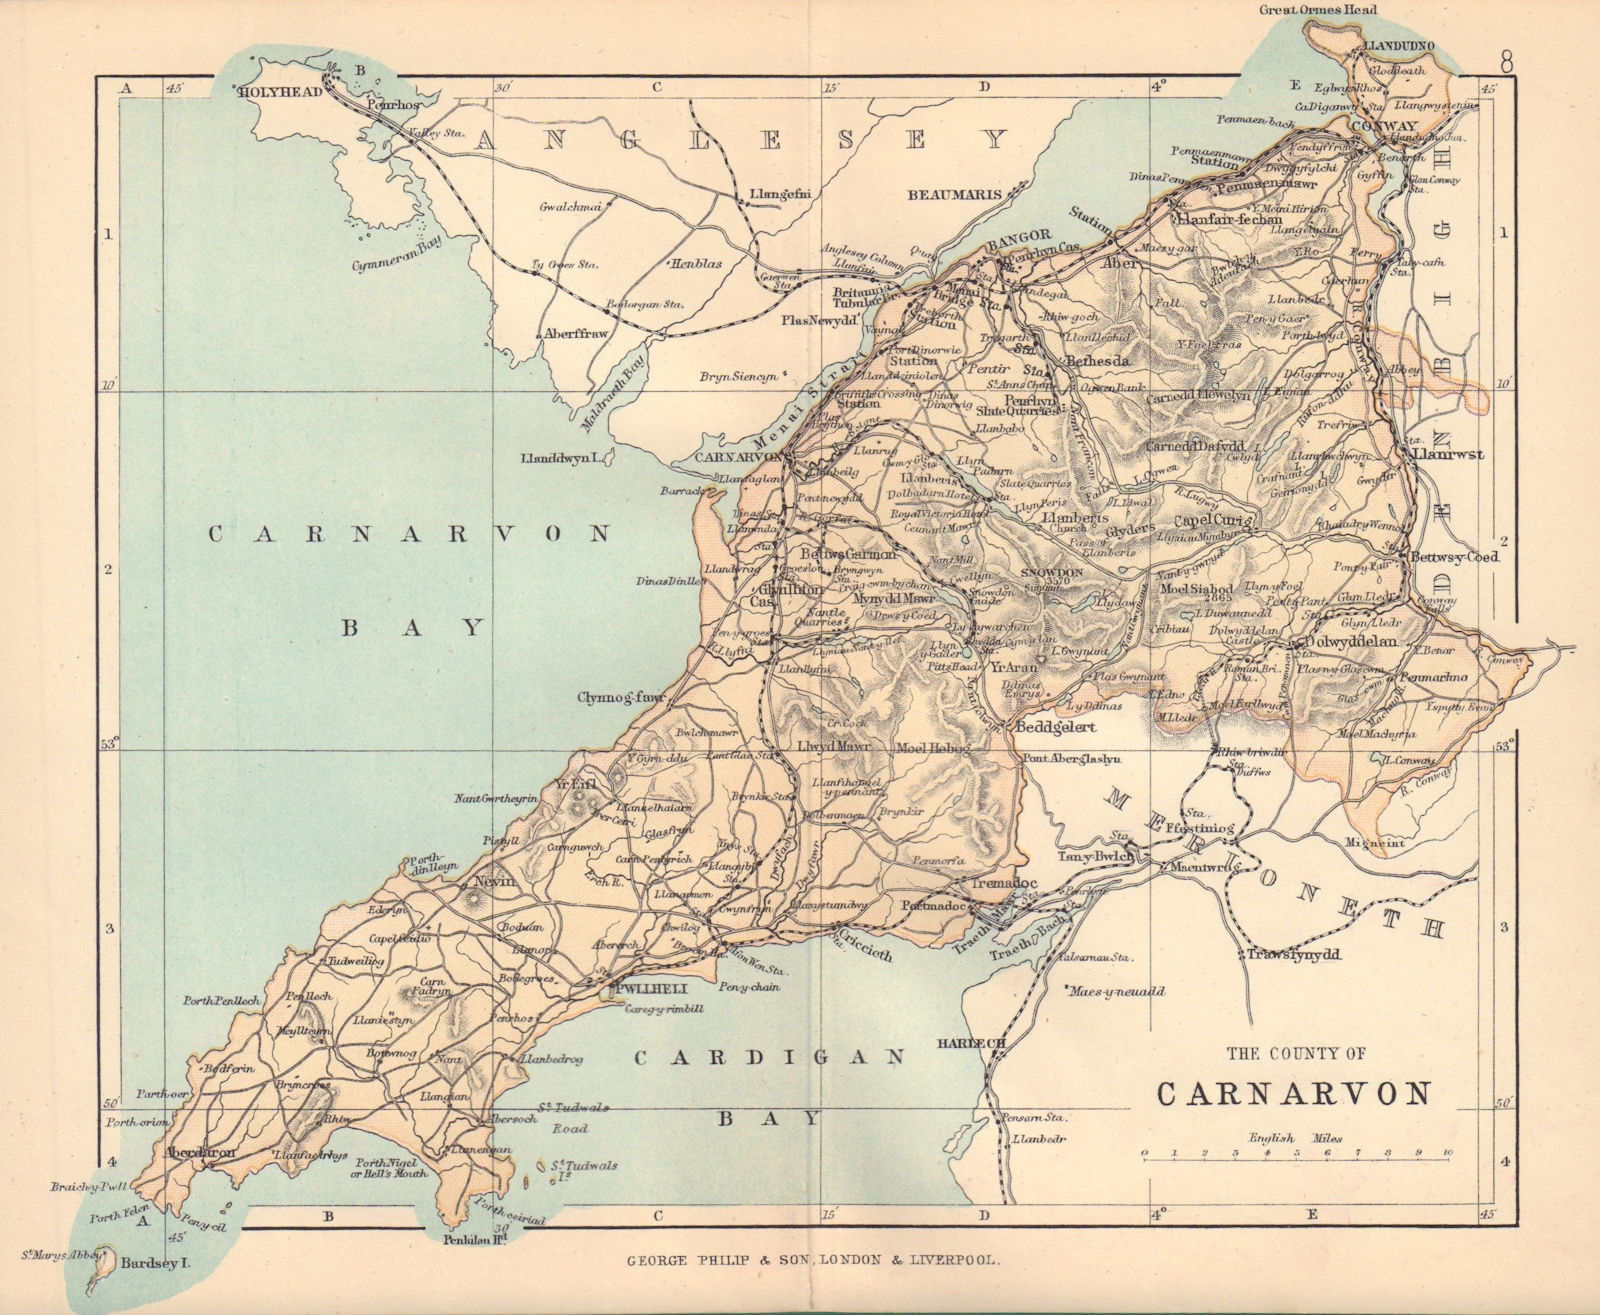 Associate Product CAERNARFONSHIRE "County of Carnarvon" Bangor Conwy Wales BARTHOLOMEW 1885 map